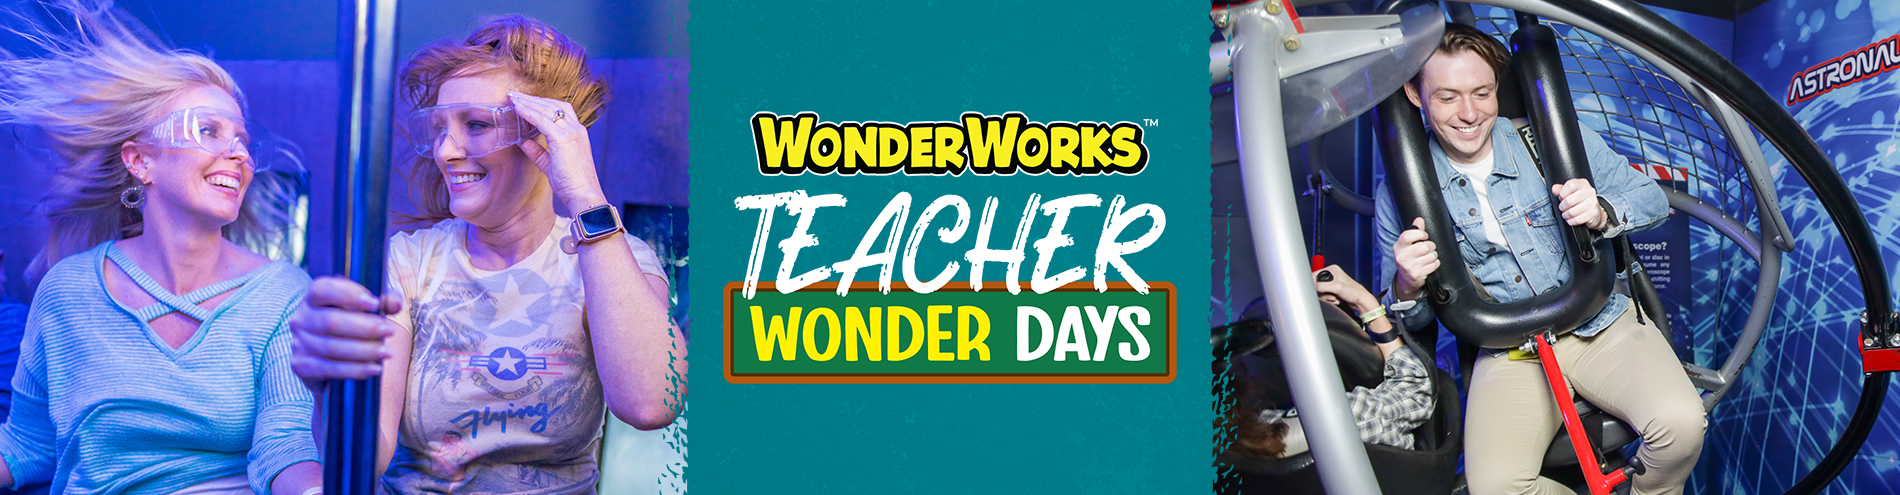 Teacher Wonder Days Web Slider